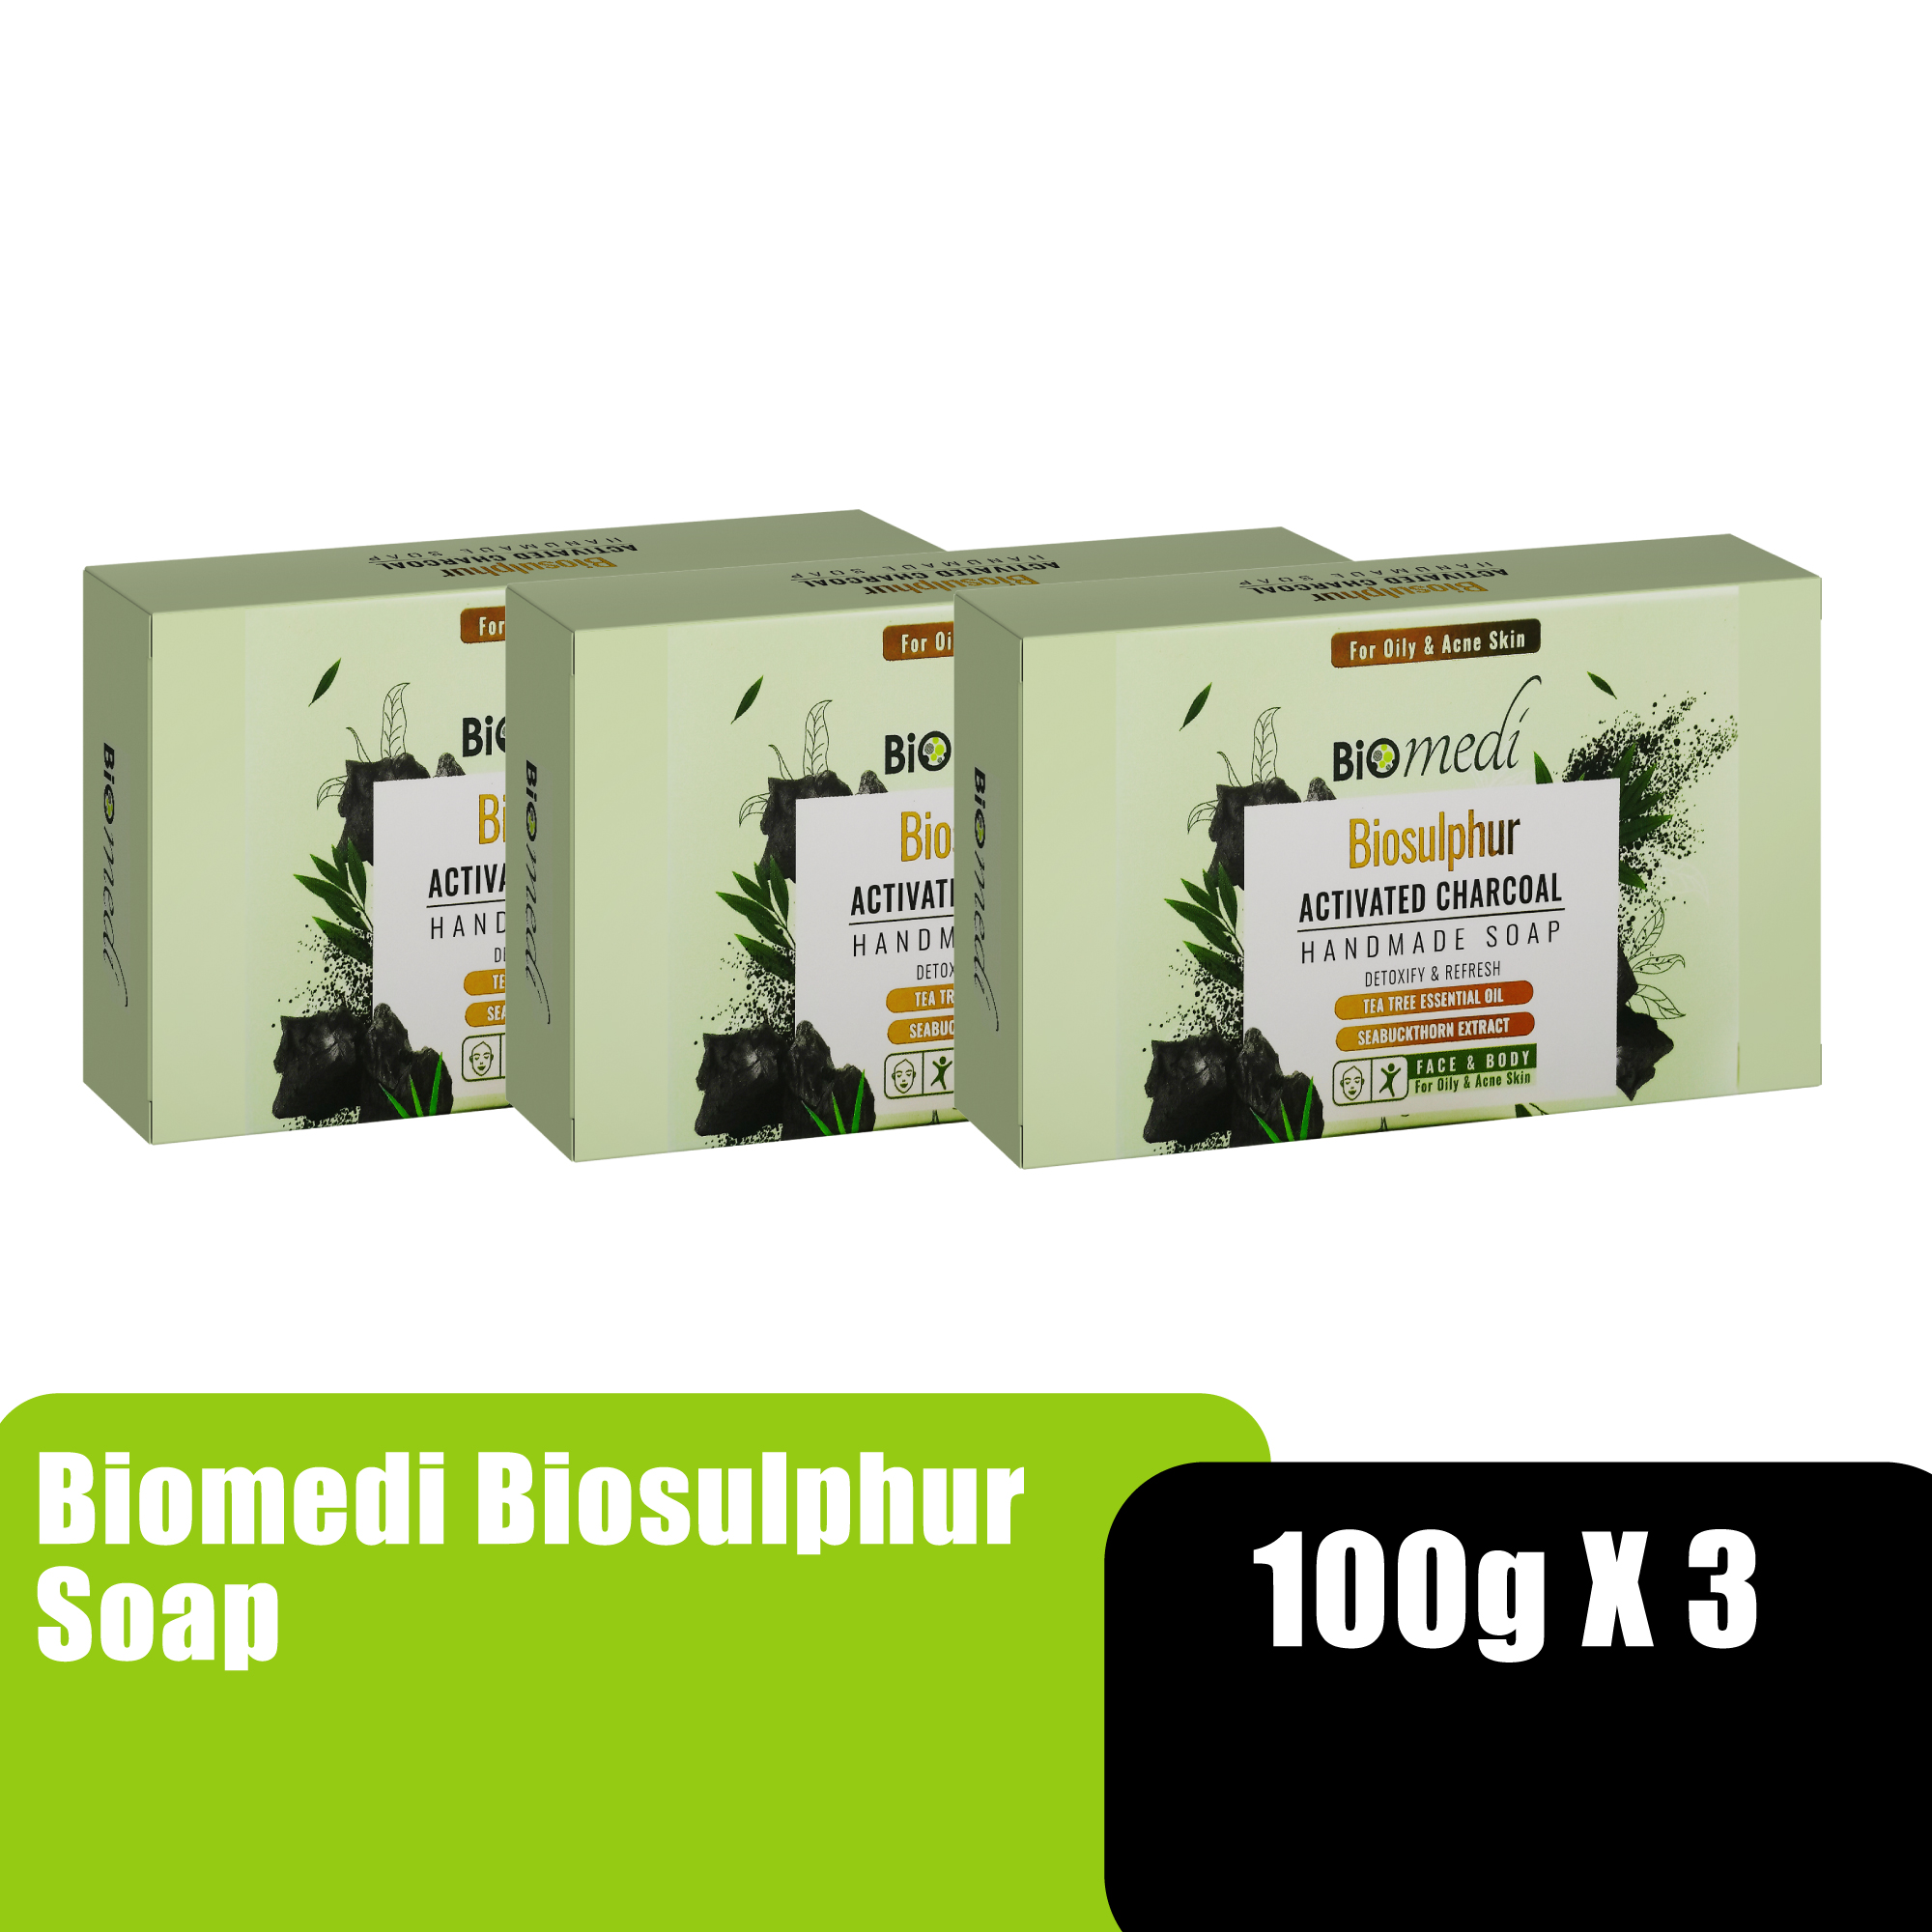 BIOMEDI BIOSULPHUR SOAP 100G X 3